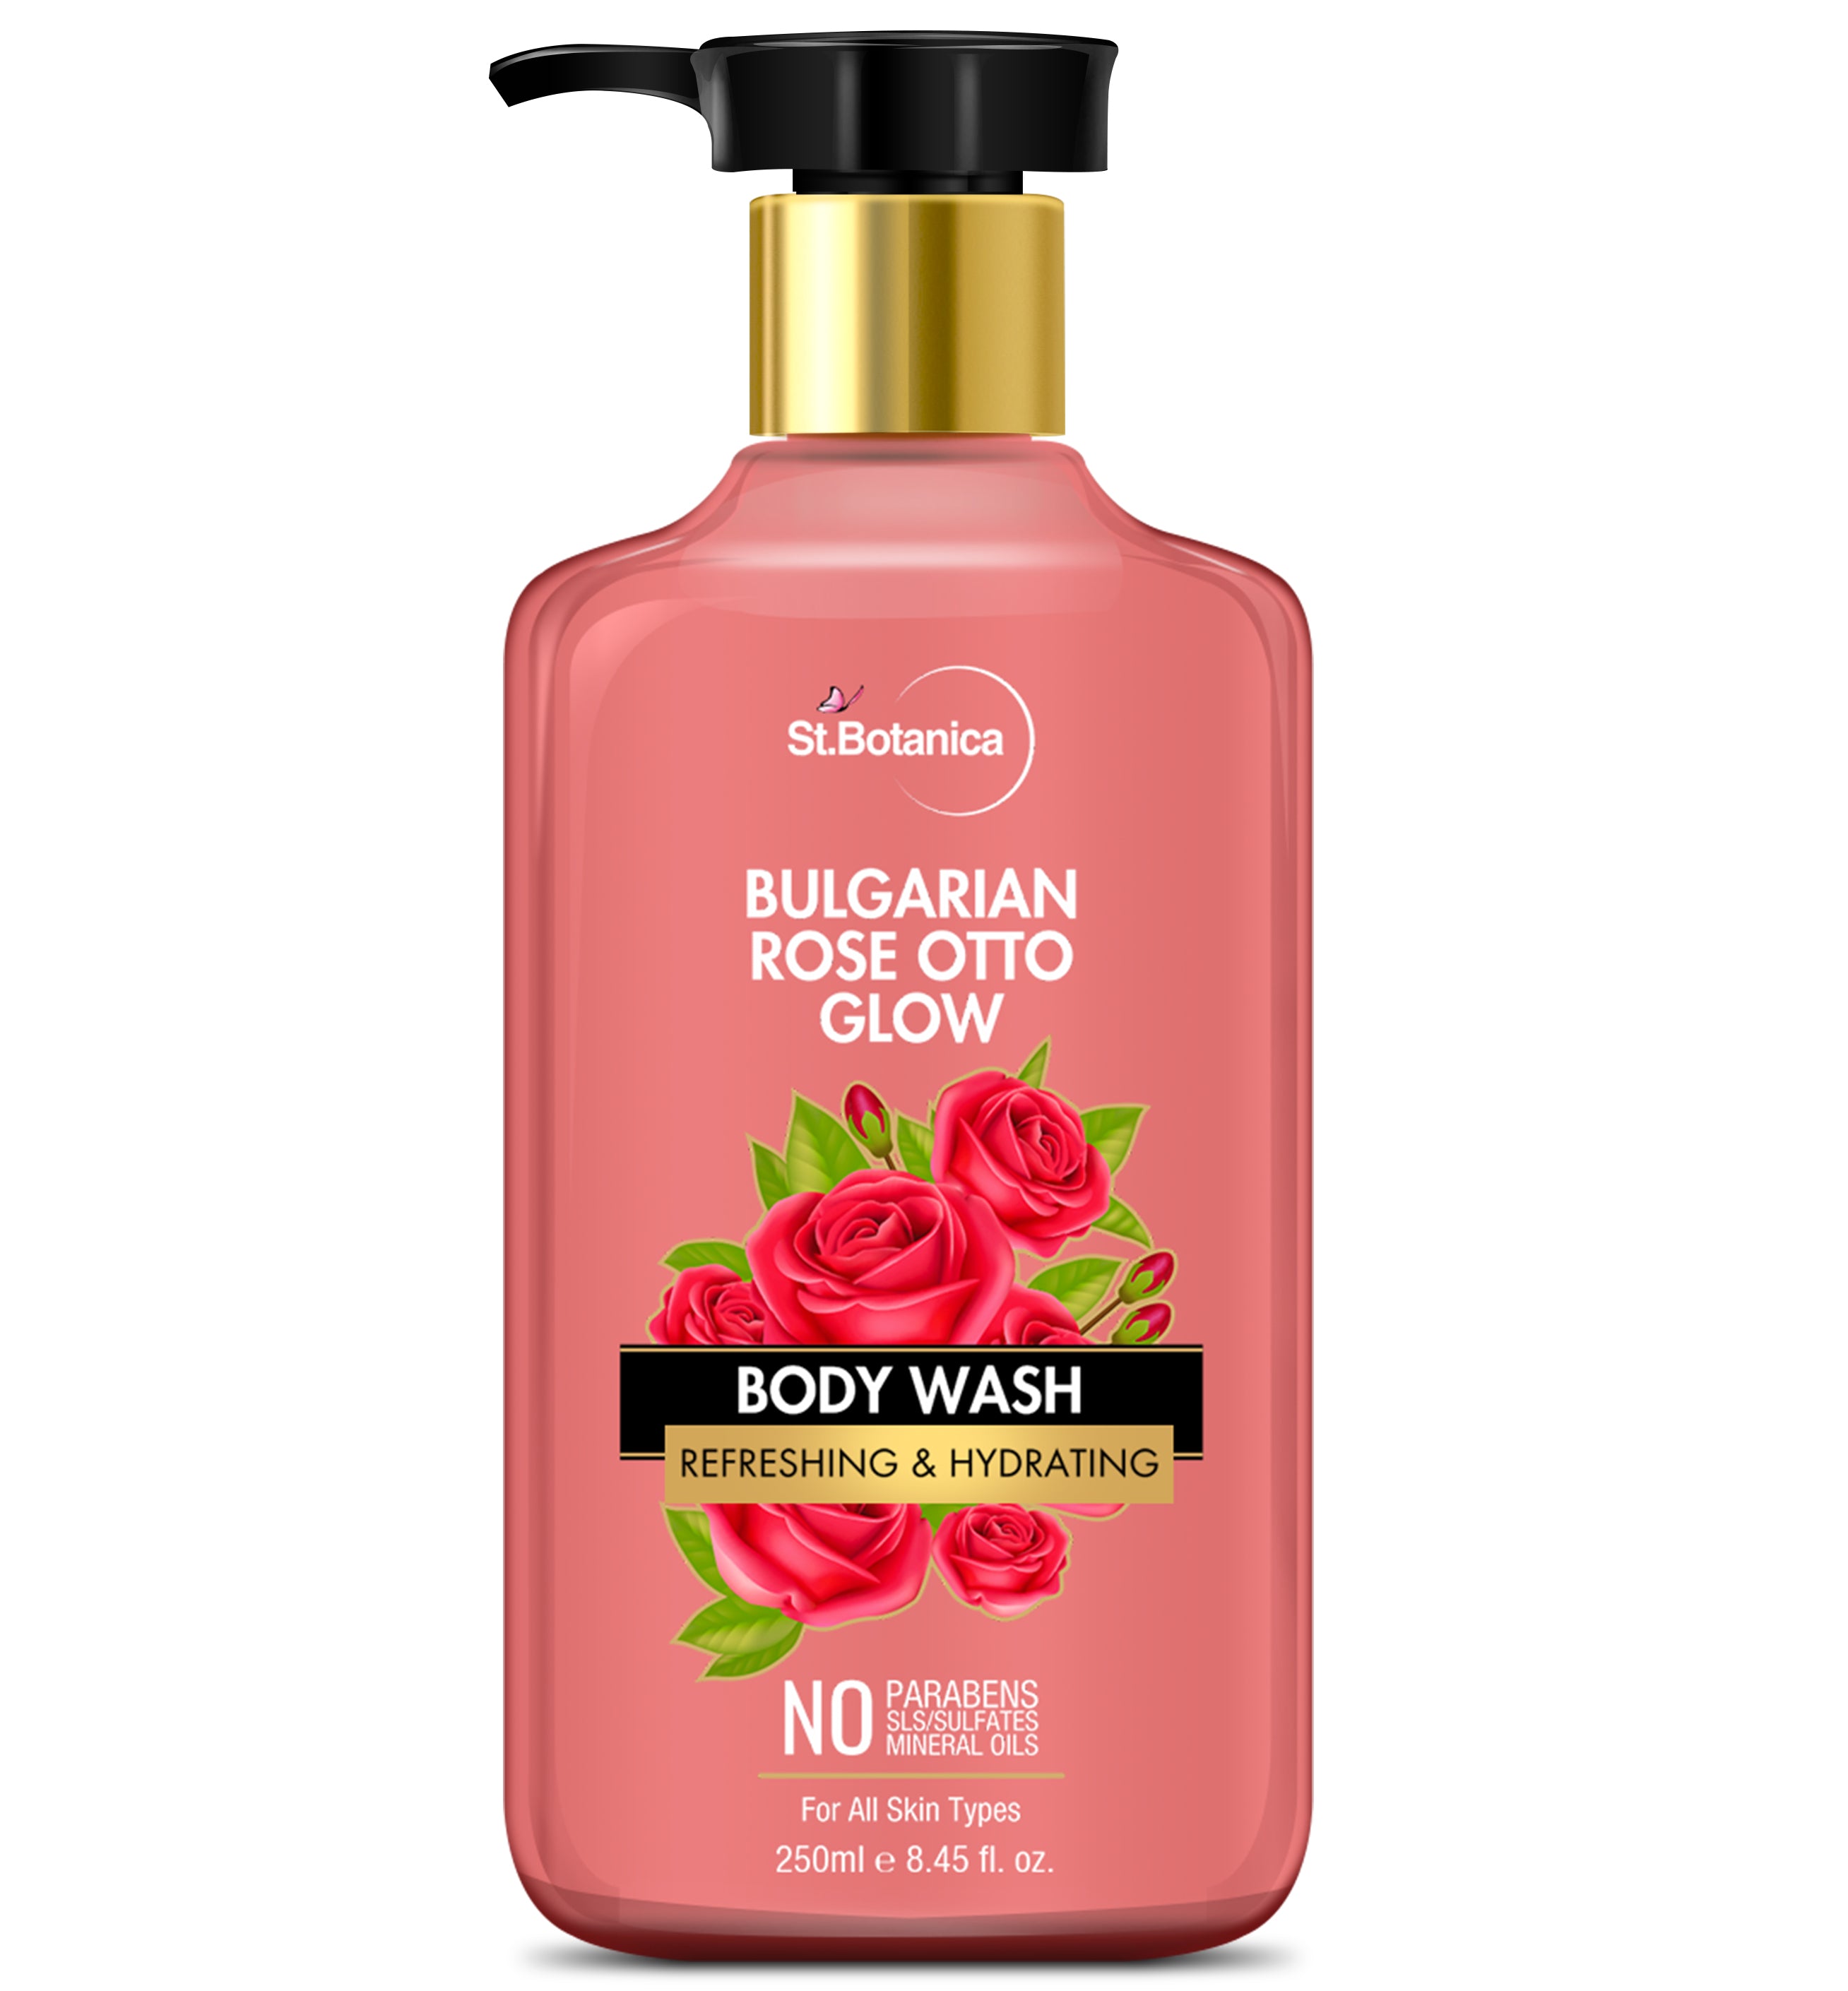 St.Botanica Bulgarian Rose Otto Glow Body Wash Refreshing & Hydrating No Paraben & Sls, 250 ml (STBOT678)